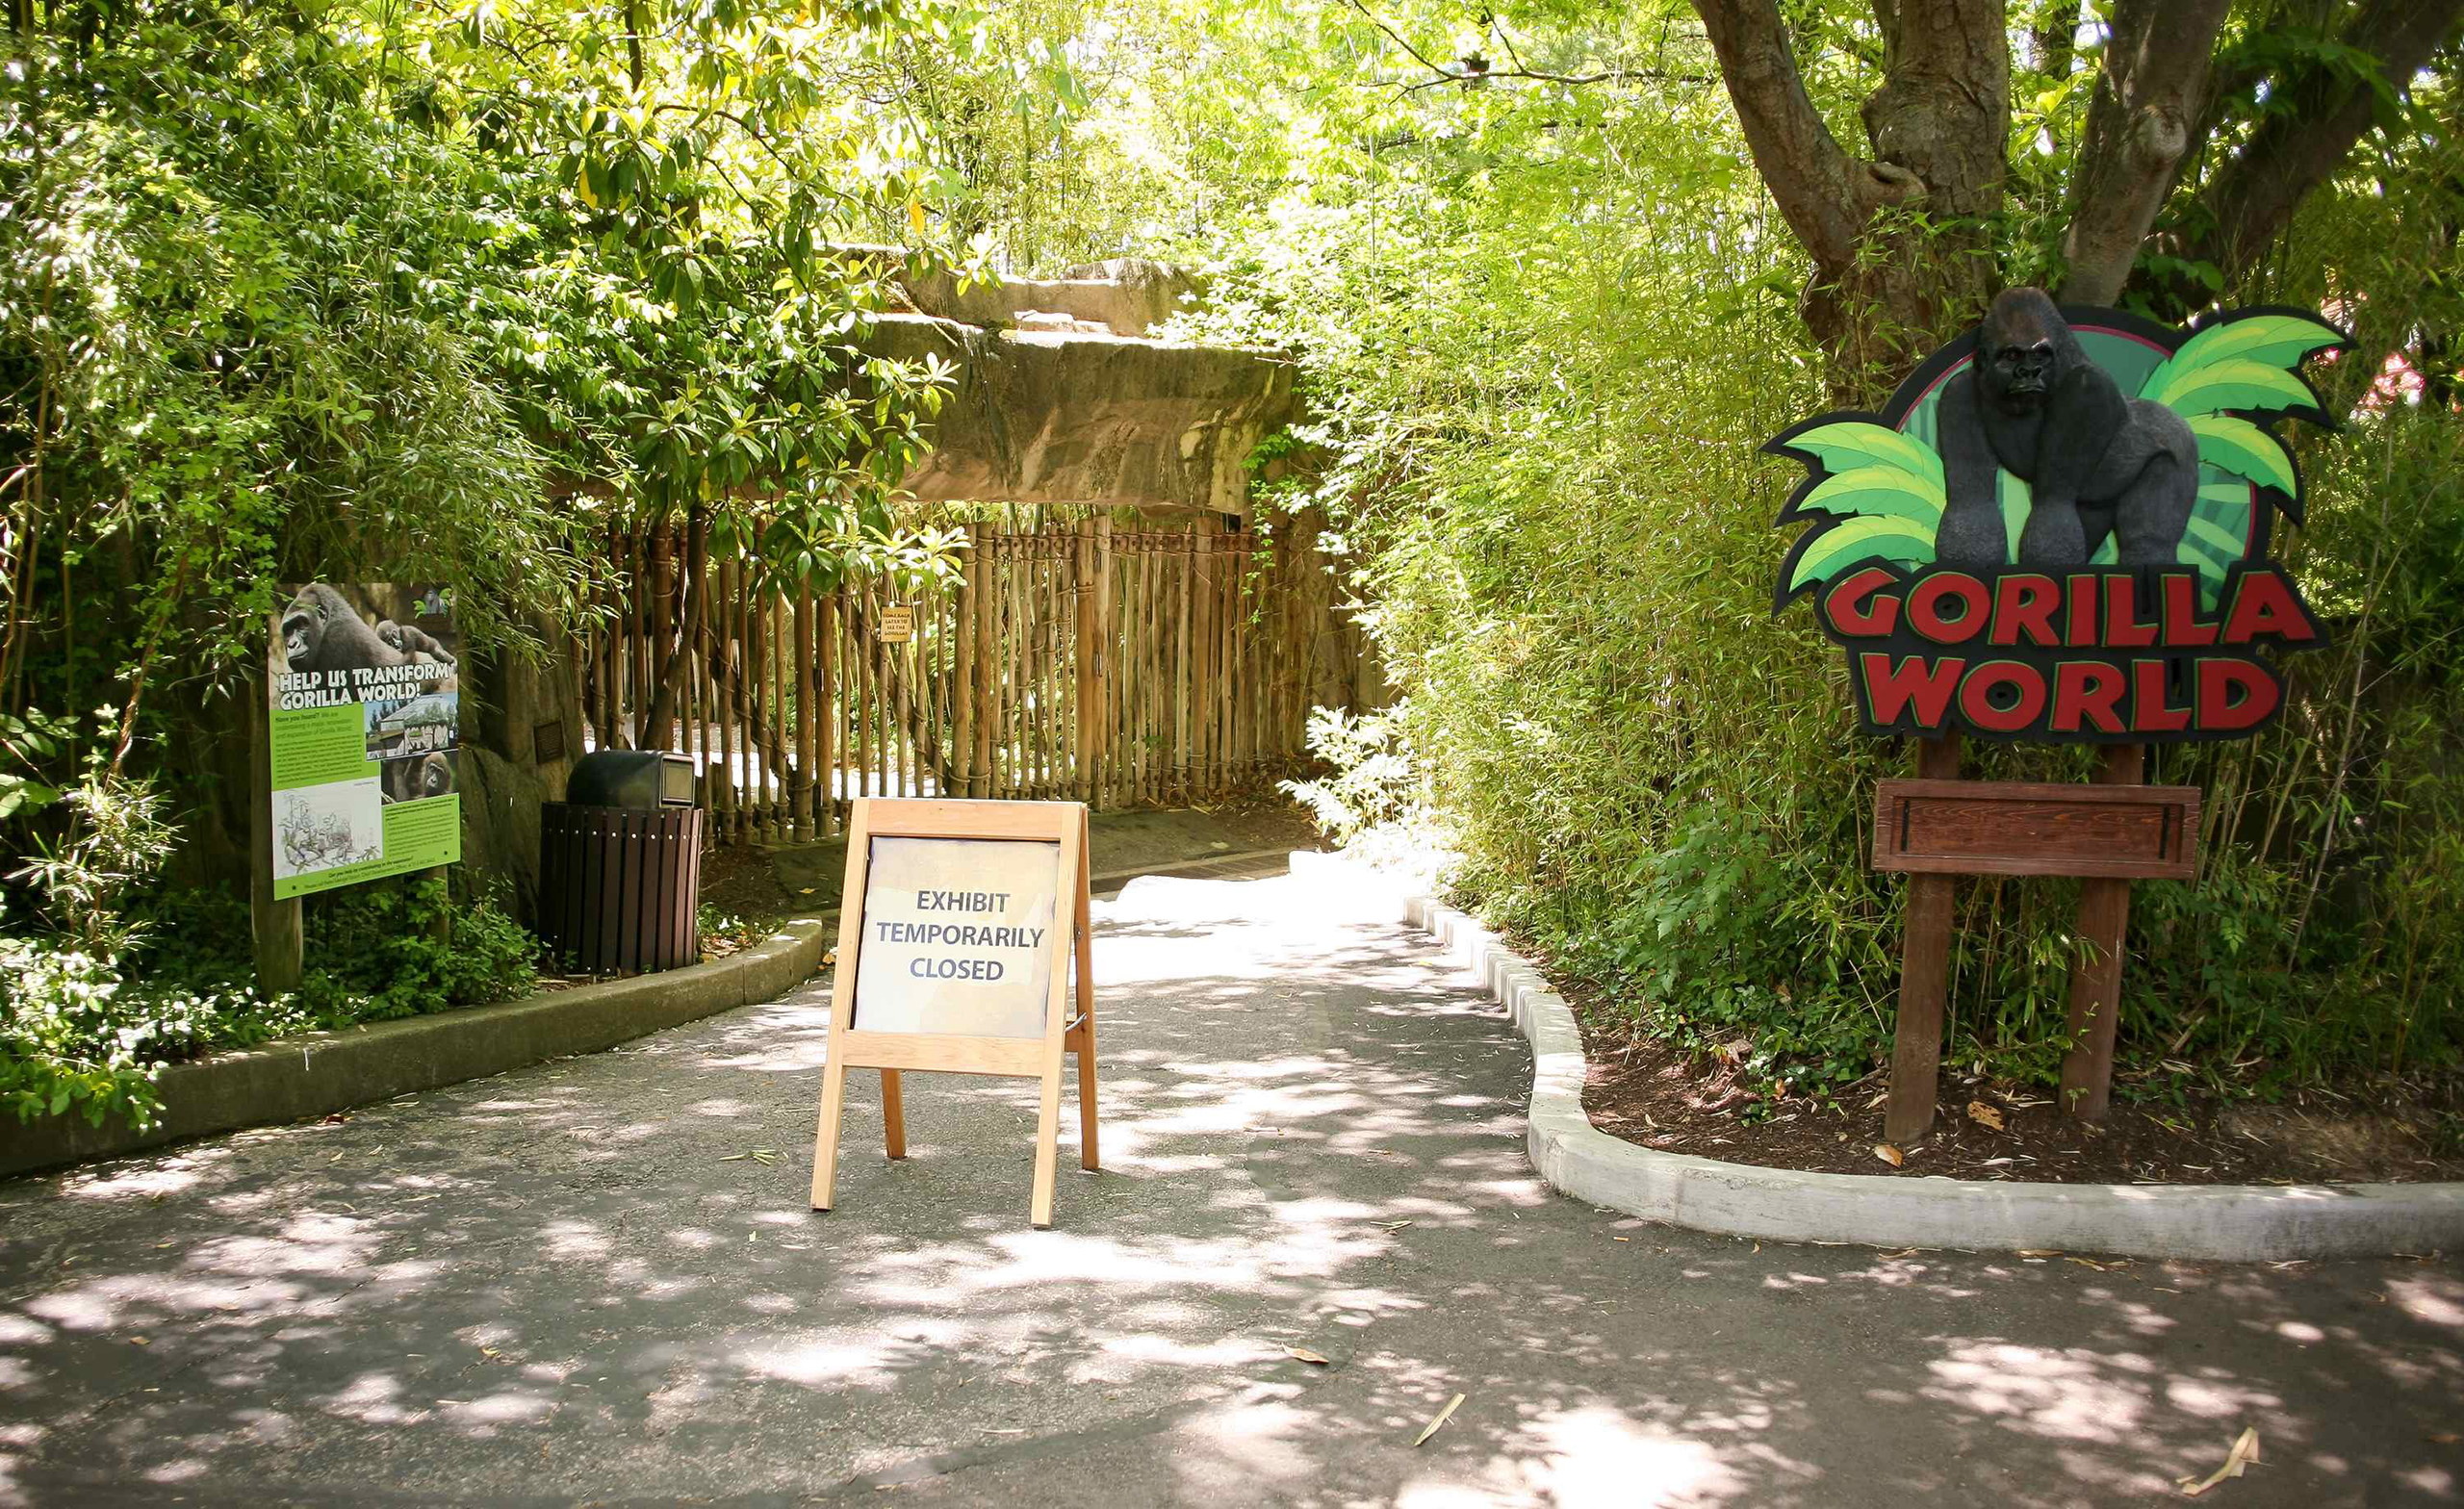 The entrance to the Cincinnati Zoo's Gorilla World exhibit is closed in Cincinnati, Ohio